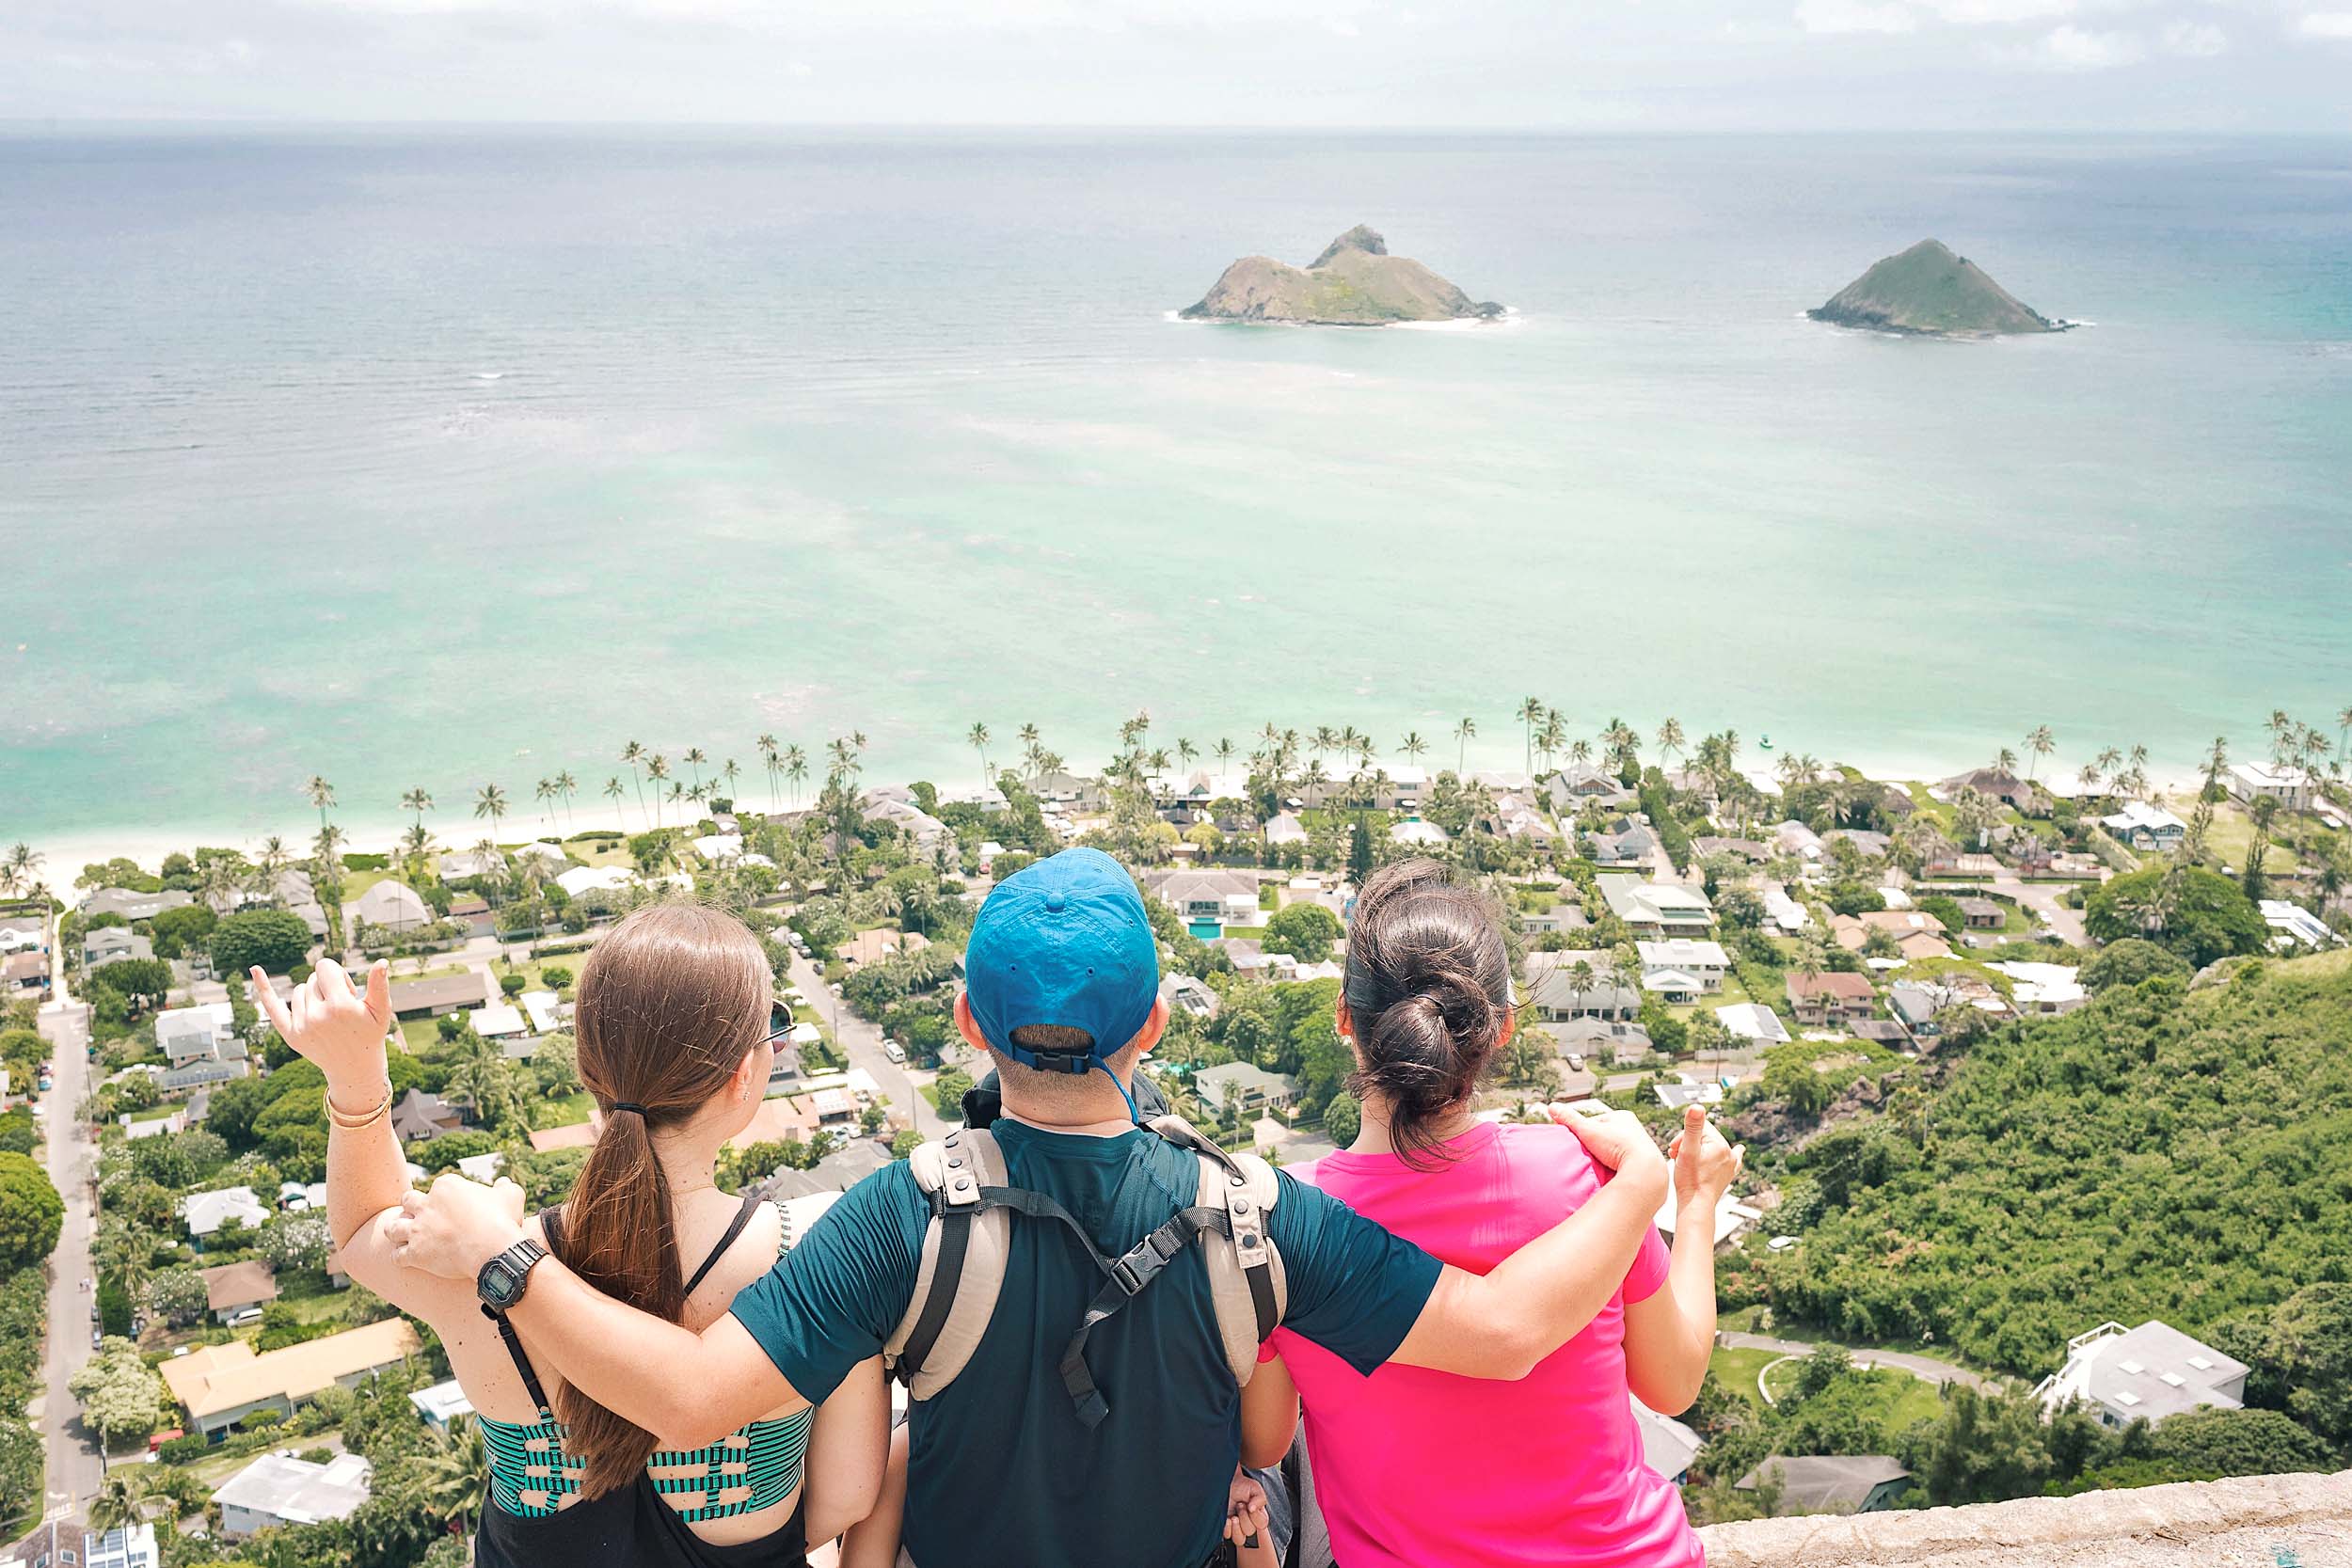 Lanikai Pillbox hike views - the most rewarding hike views in all of Oahu!